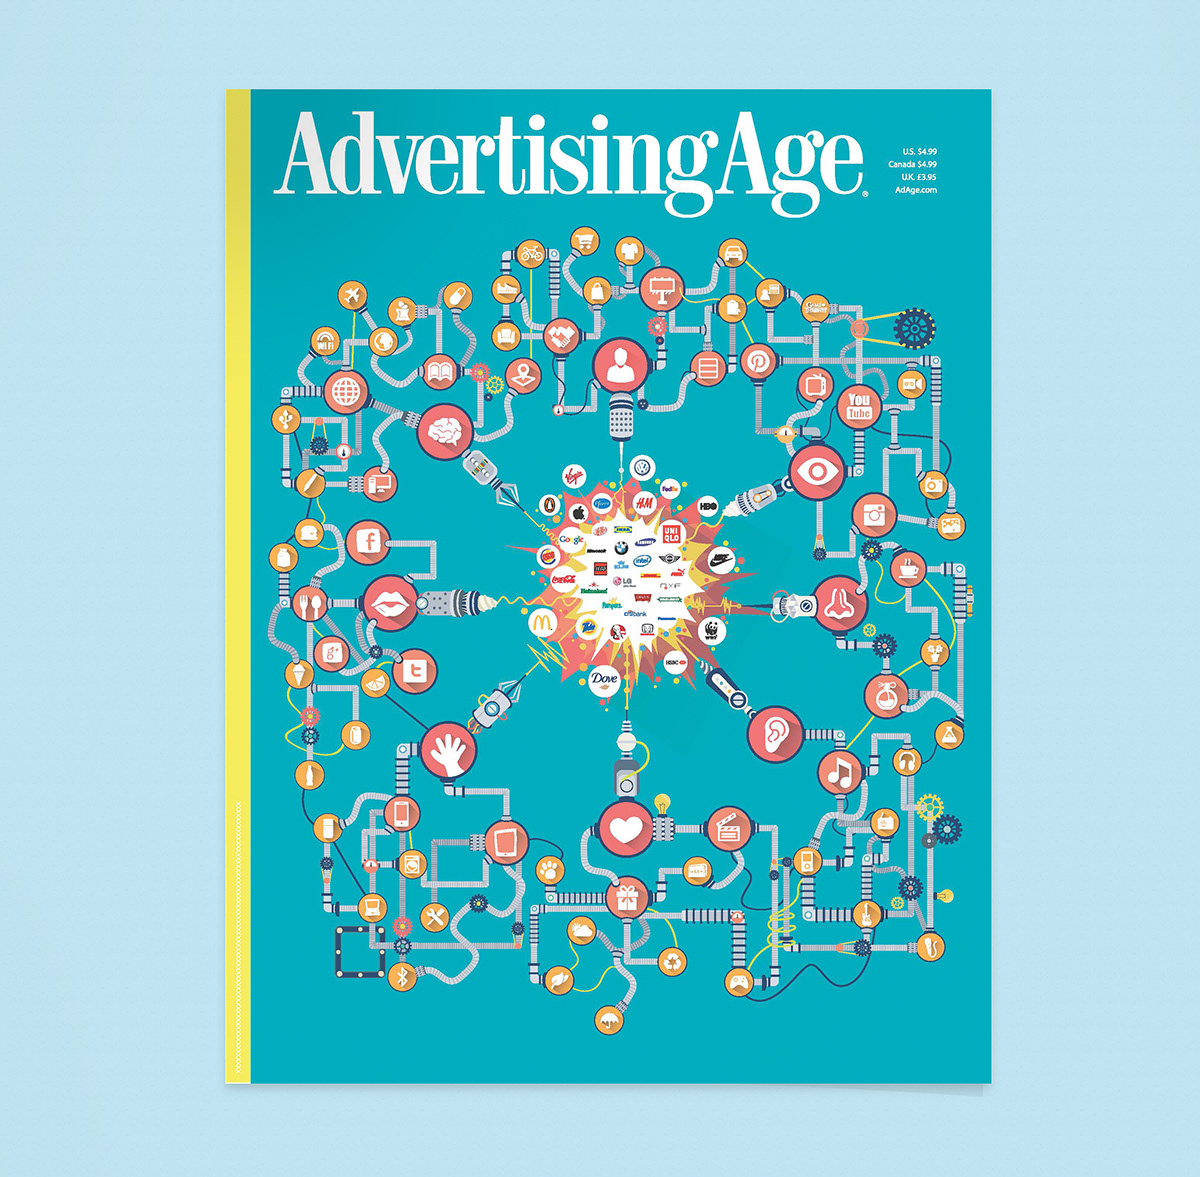 Advertising Age magazine innovation